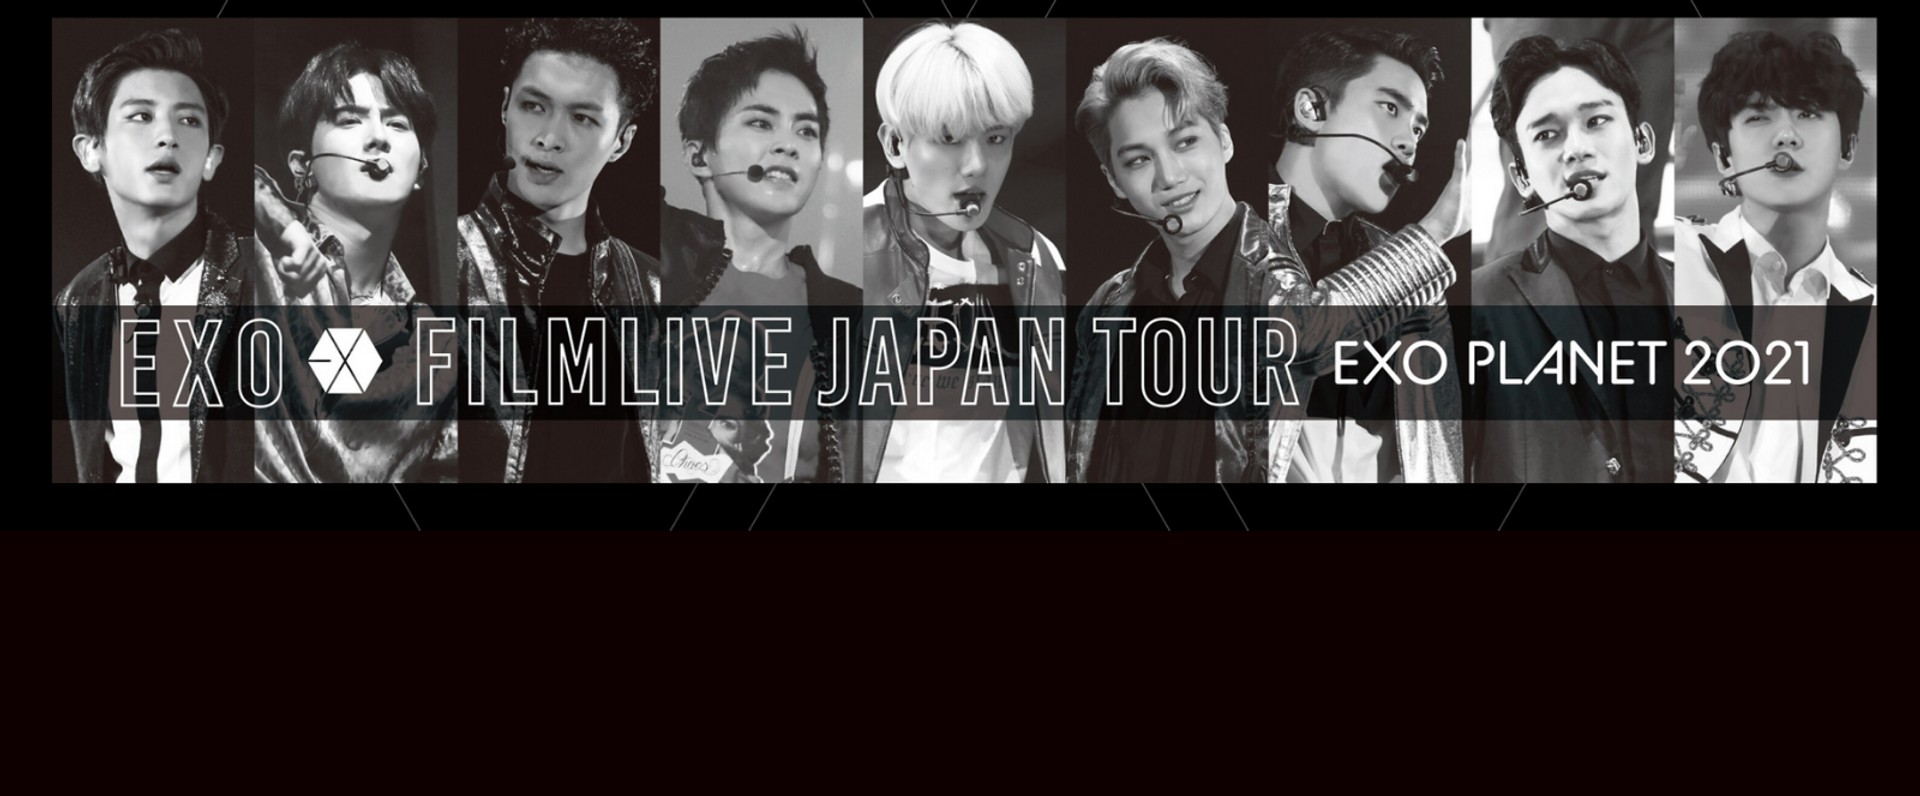 EXO announce FILMLIVE Japan Tour 2021 | Bandwagon | Music media